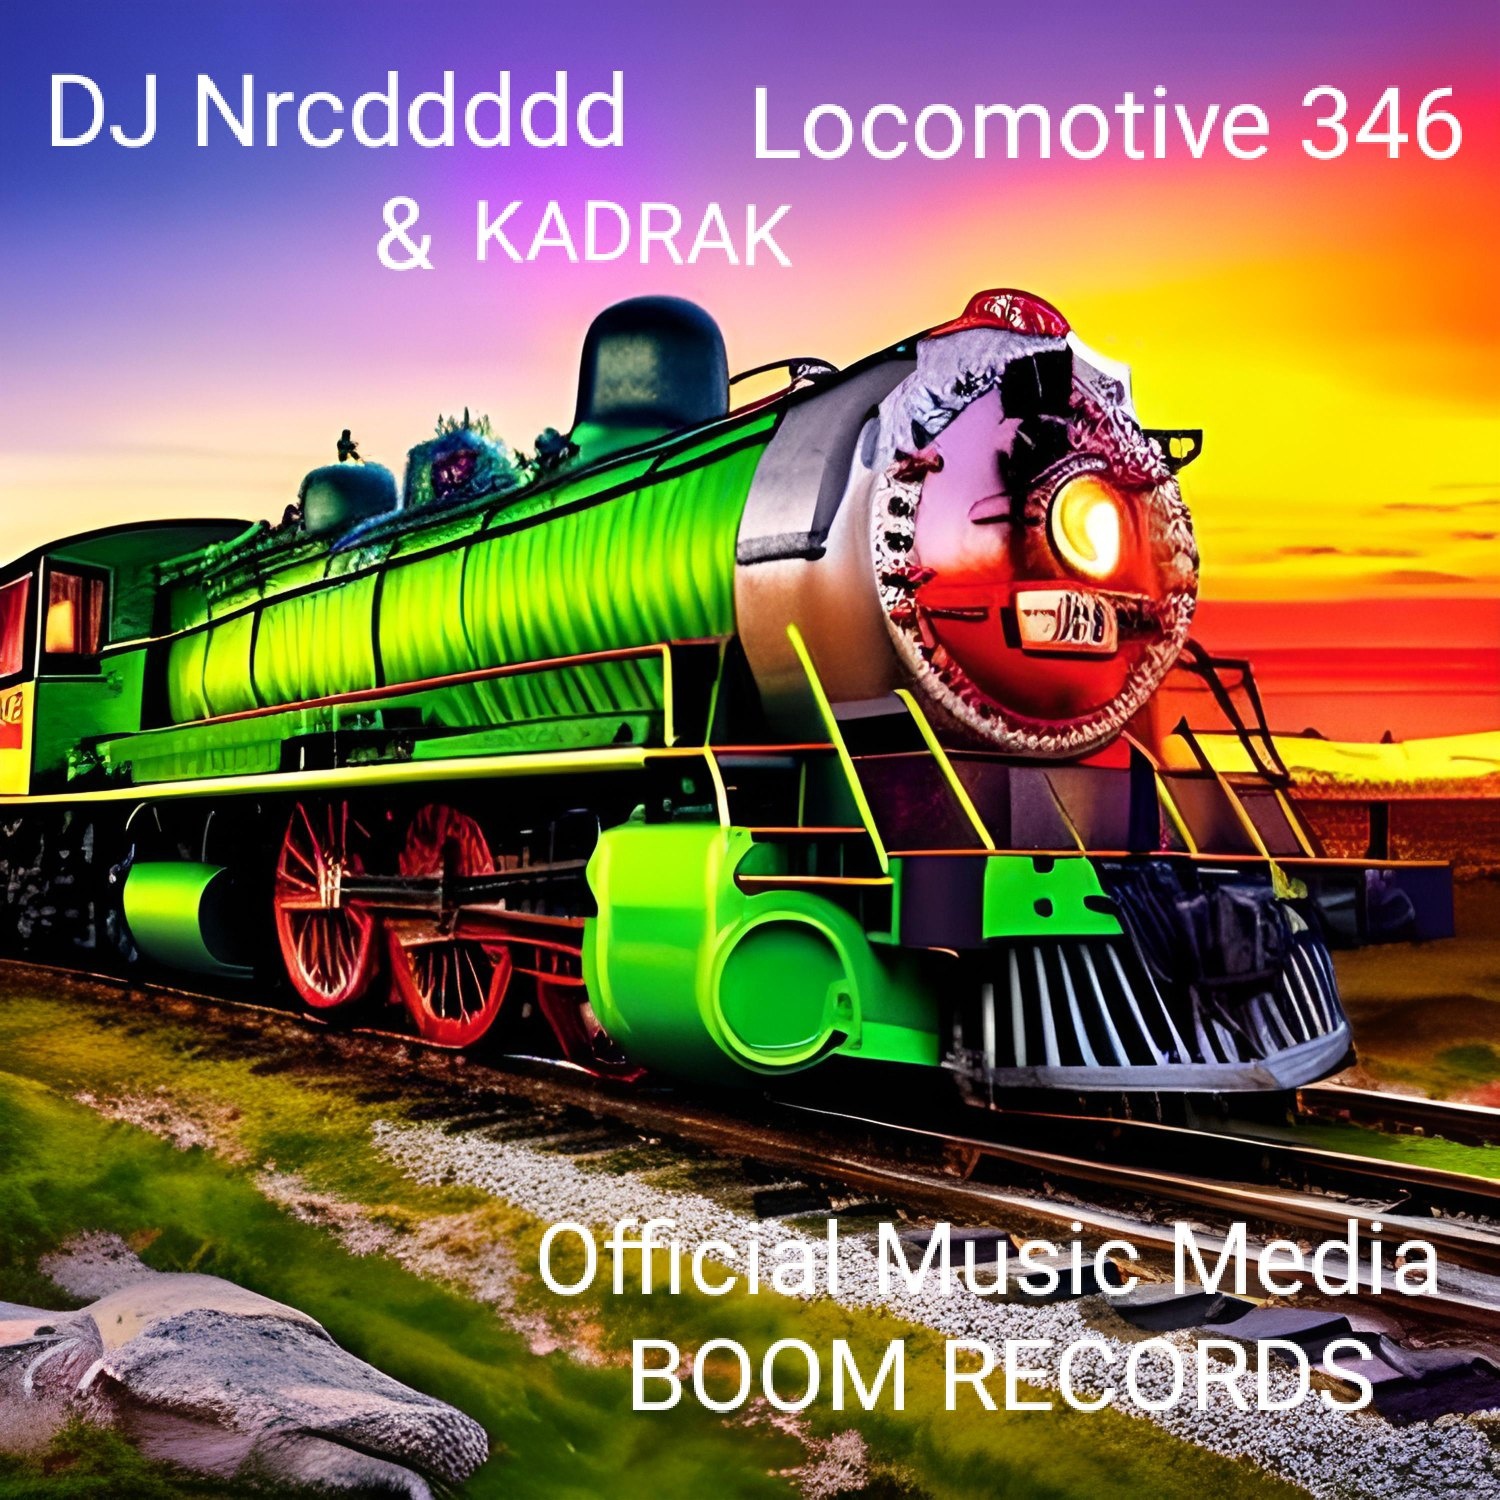 DJ Nrcddddd & KADRAK — Locomotive 346 cover artwork